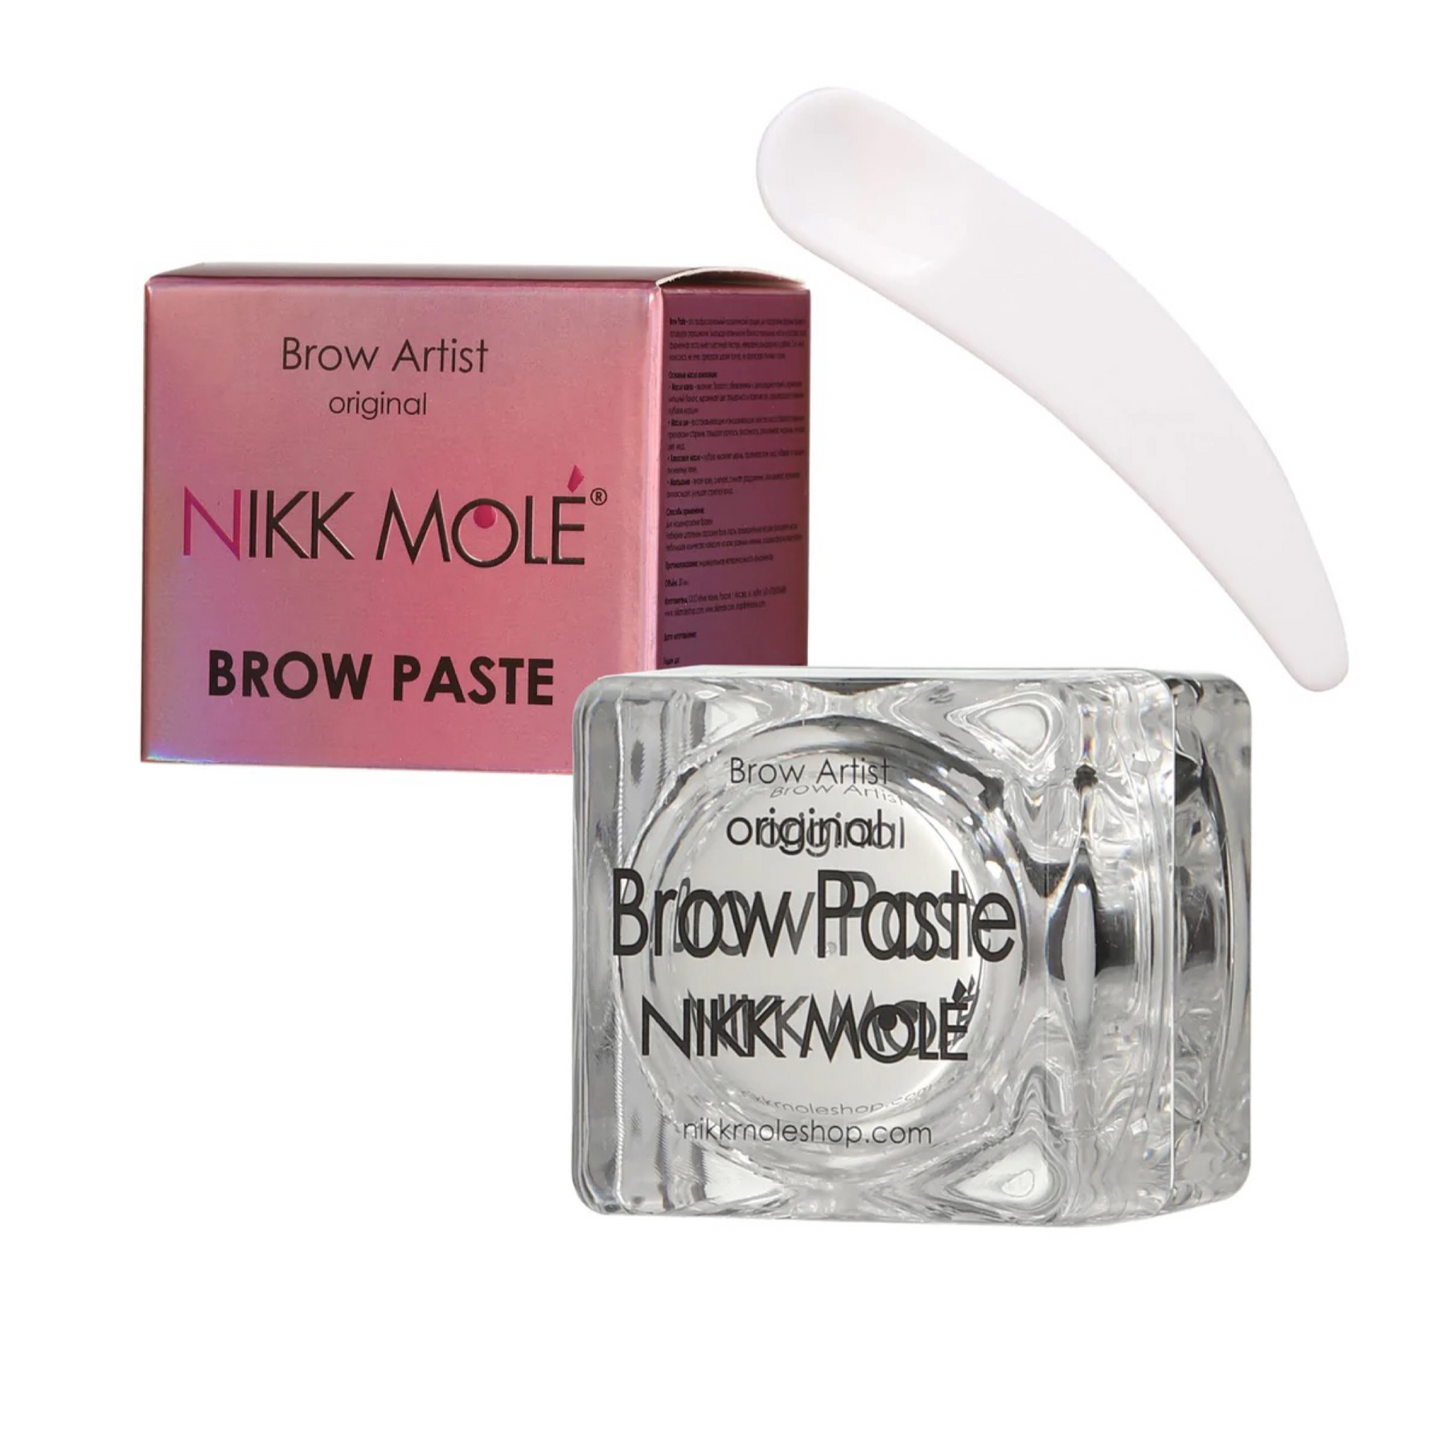 NIKK MOLE - Brow Paste Original Maxi 30g